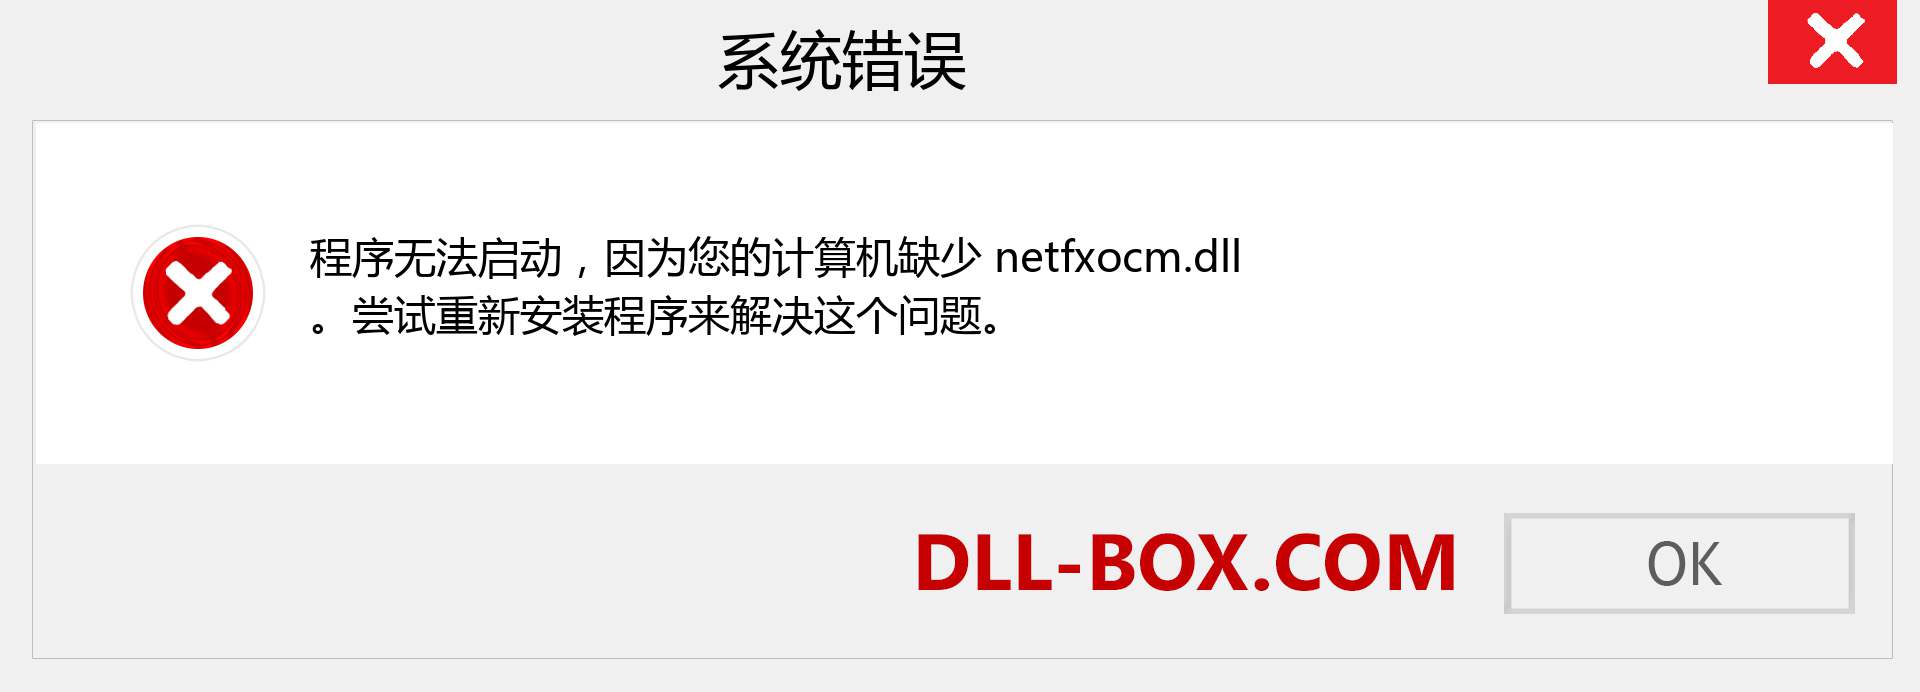 netfxocm.dll 文件丢失？。 适用于 Windows 7、8、10 的下载 - 修复 Windows、照片、图像上的 netfxocm dll 丢失错误